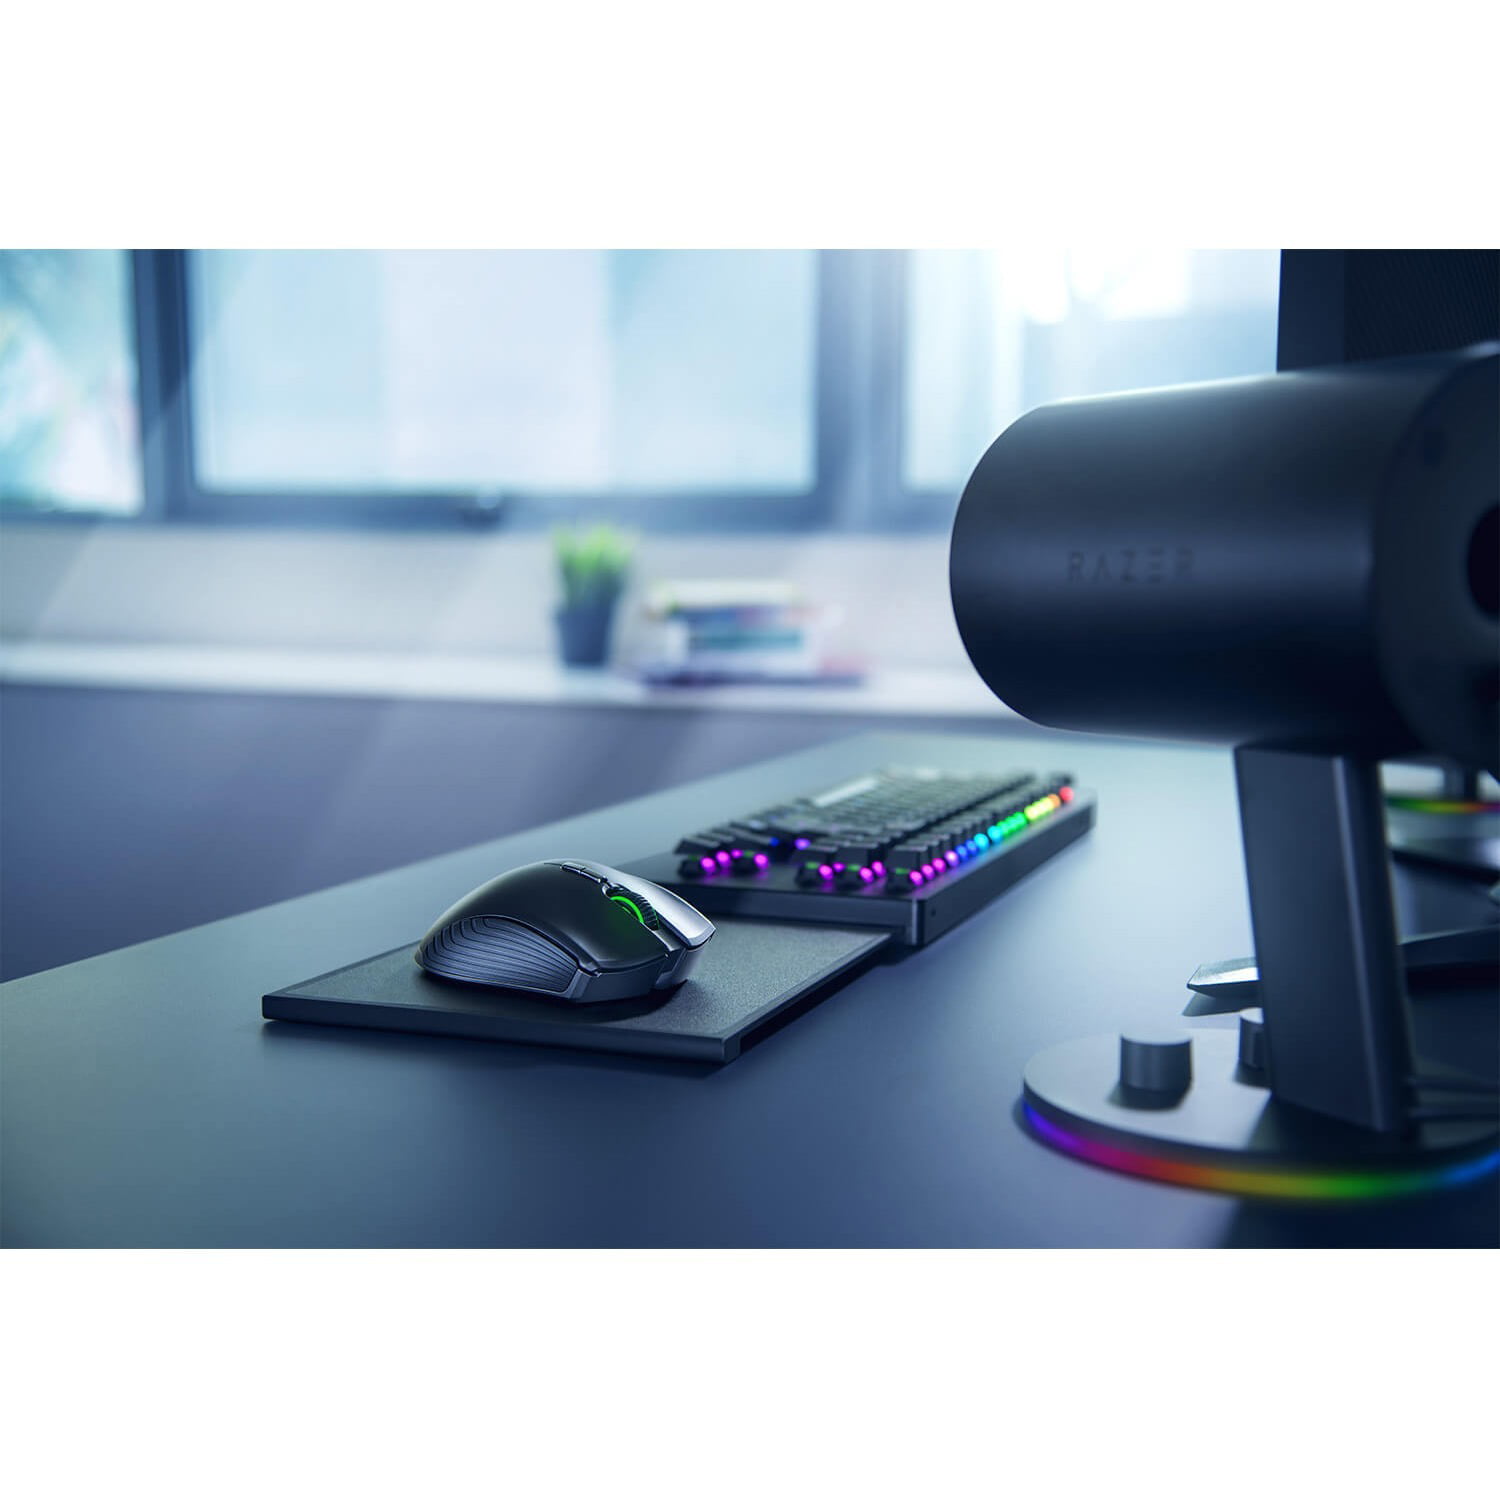  Razer Turret - Combo de teclado y mouse mecánicos inalámbricos  para PC, Xbox One, Xbox Series X y S: Chroma RGB/iluminación dinámica,  alfombrilla magnética retráctil para mouse - Batería de 40